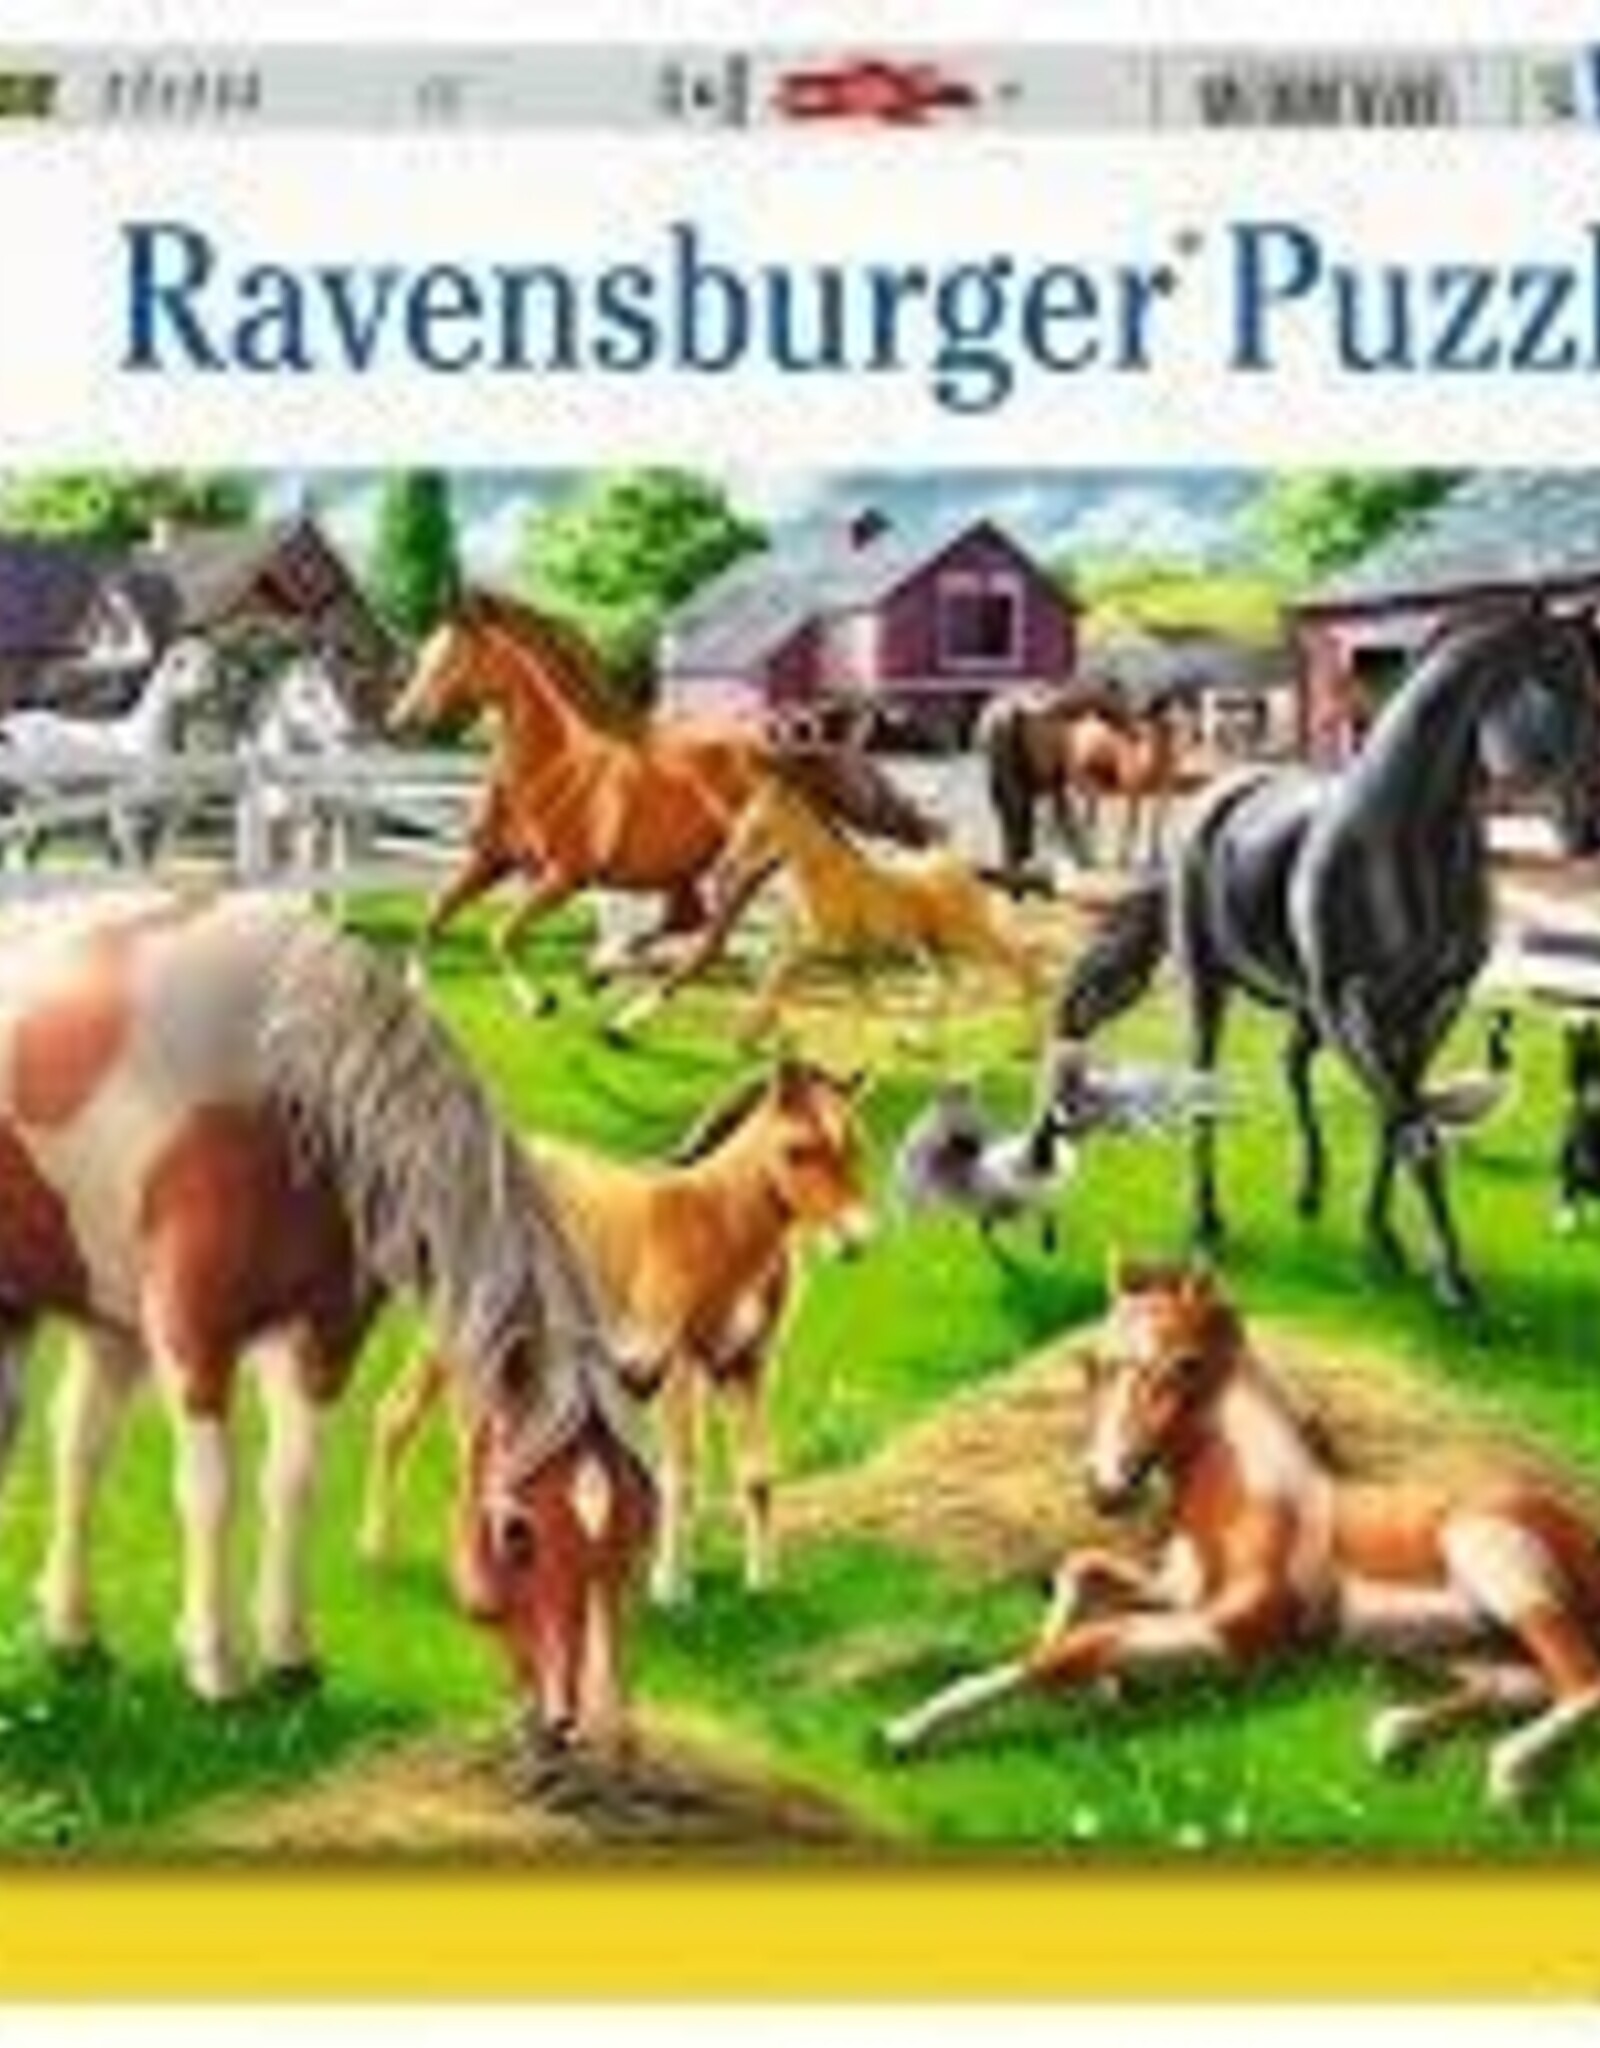 Ravensburger Happy Horses (60 pc)